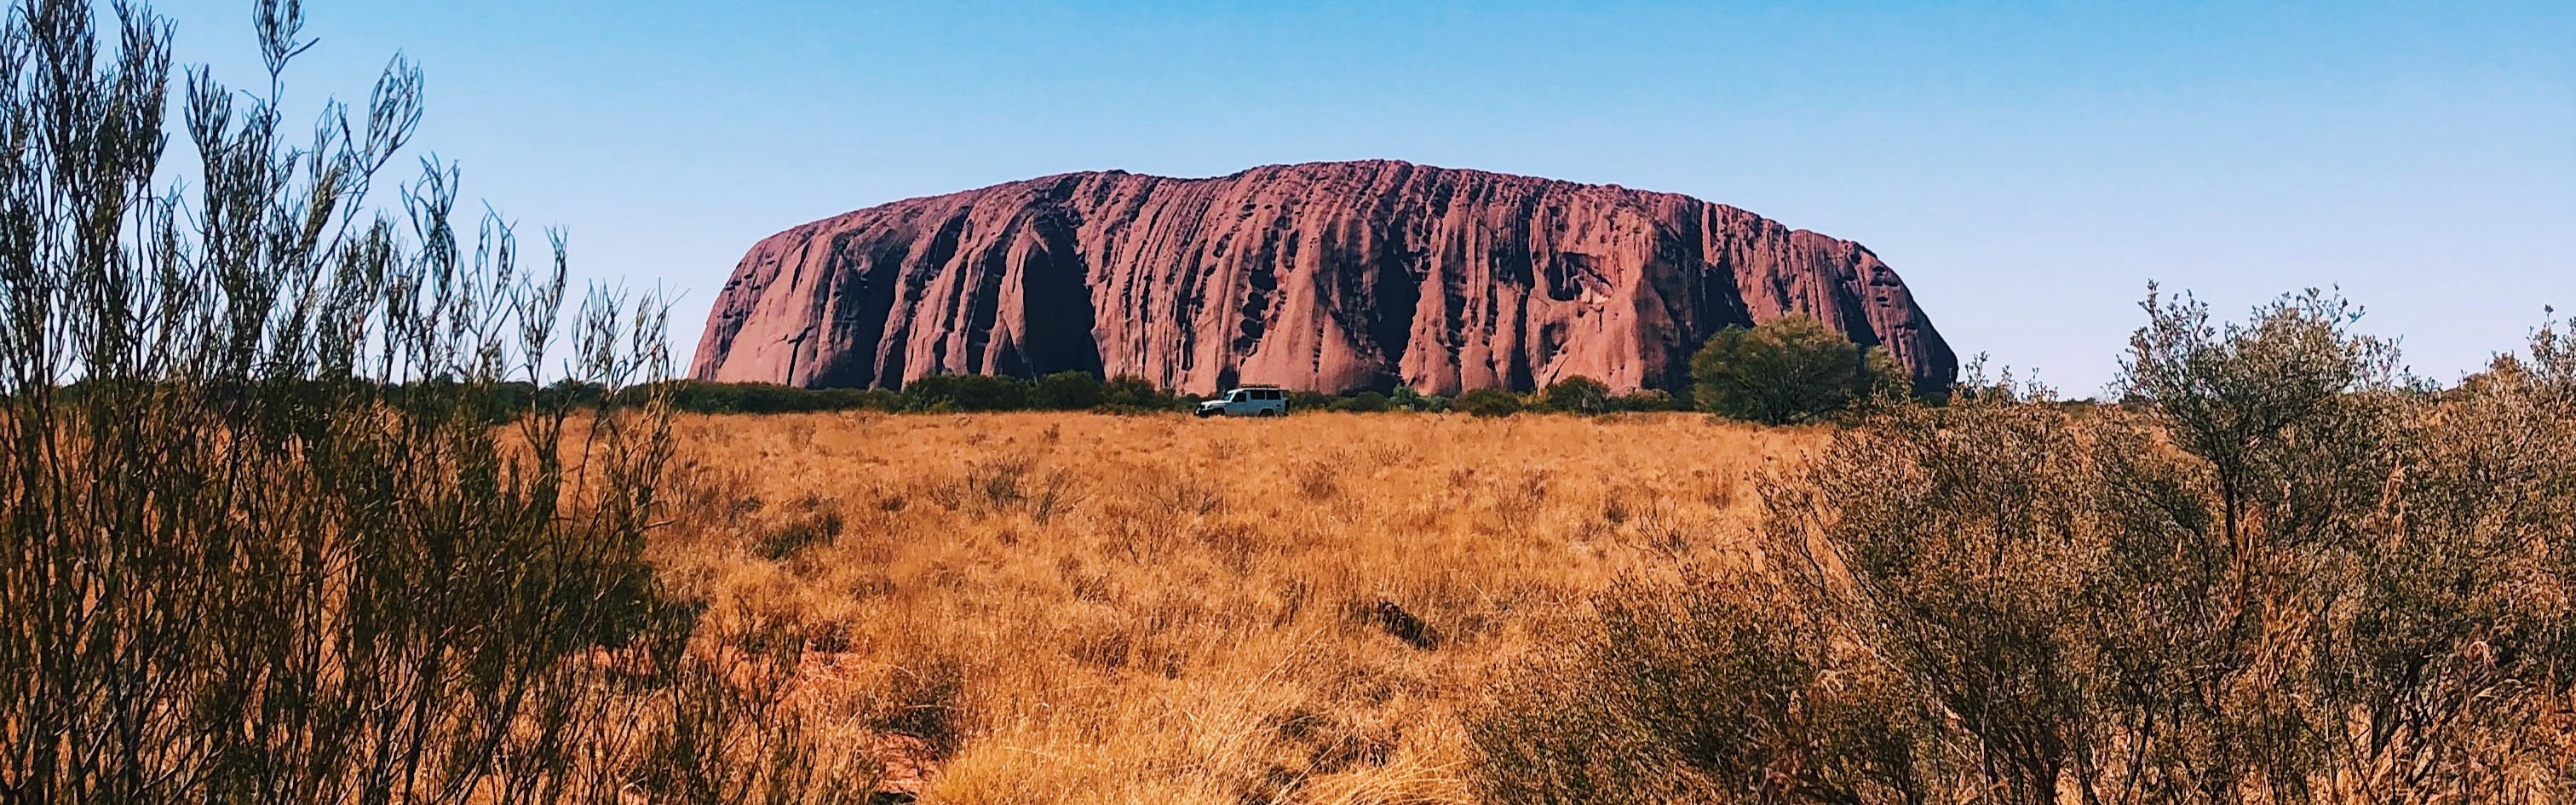 The iconic Uluru rock formation in Australia